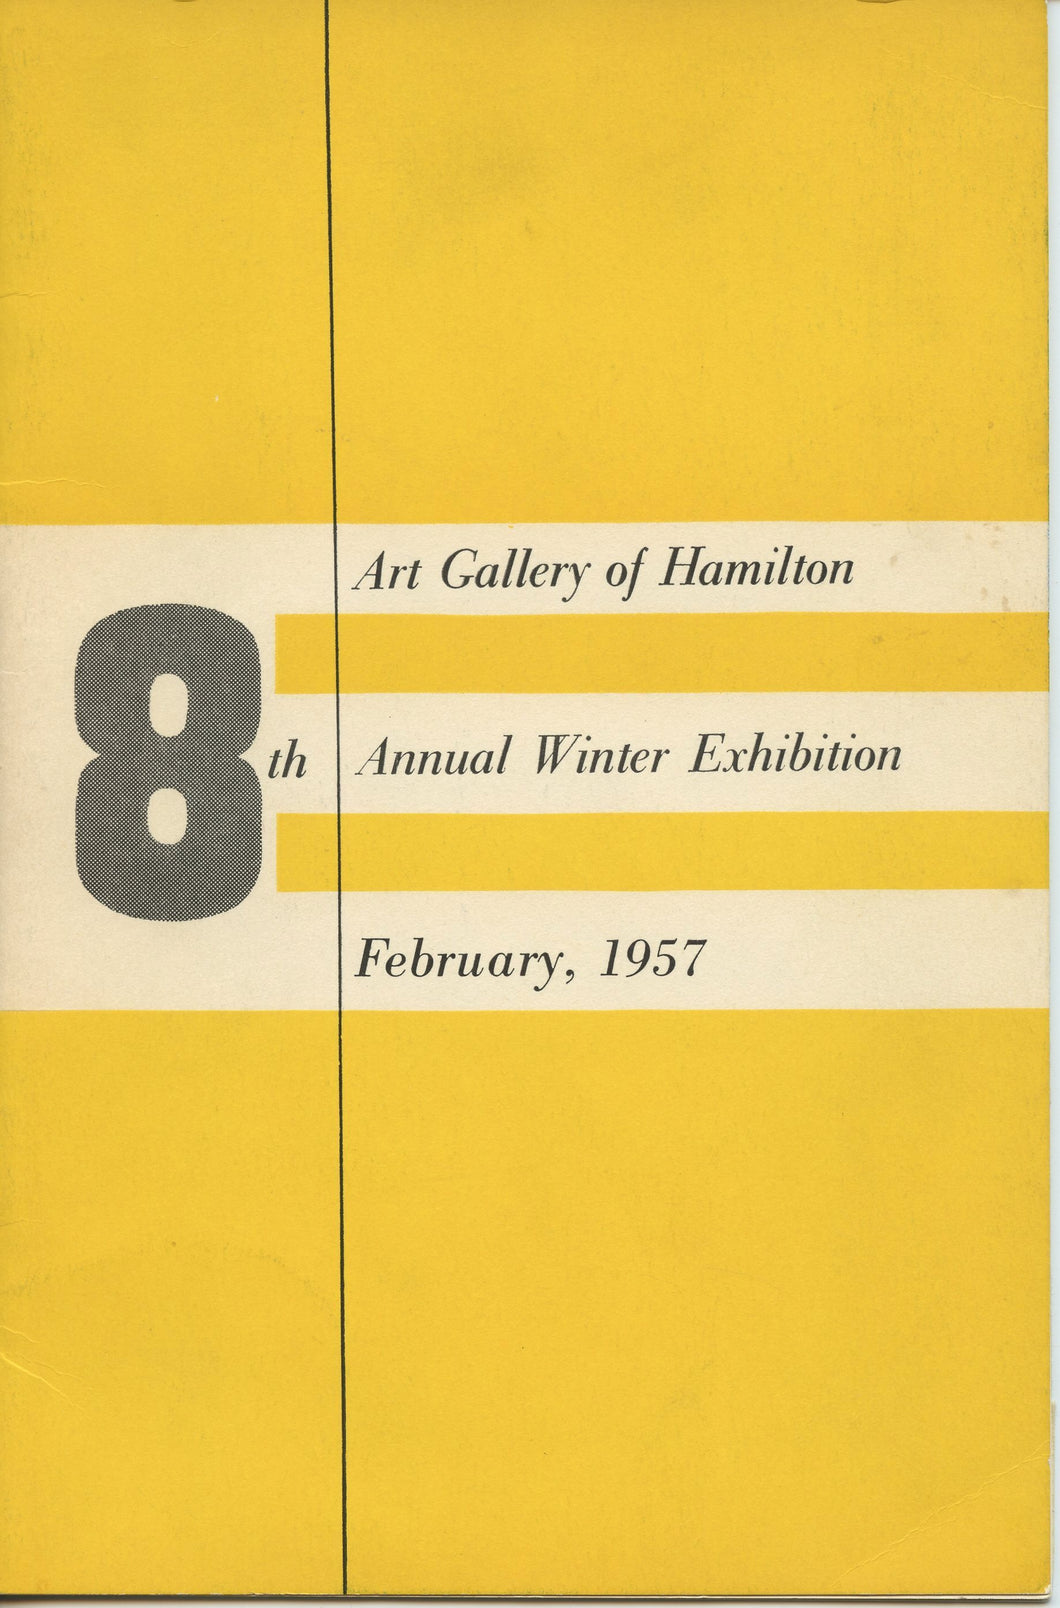 Art Gallery of Hamilton 8th Annual Winter Exhibition, February 1957